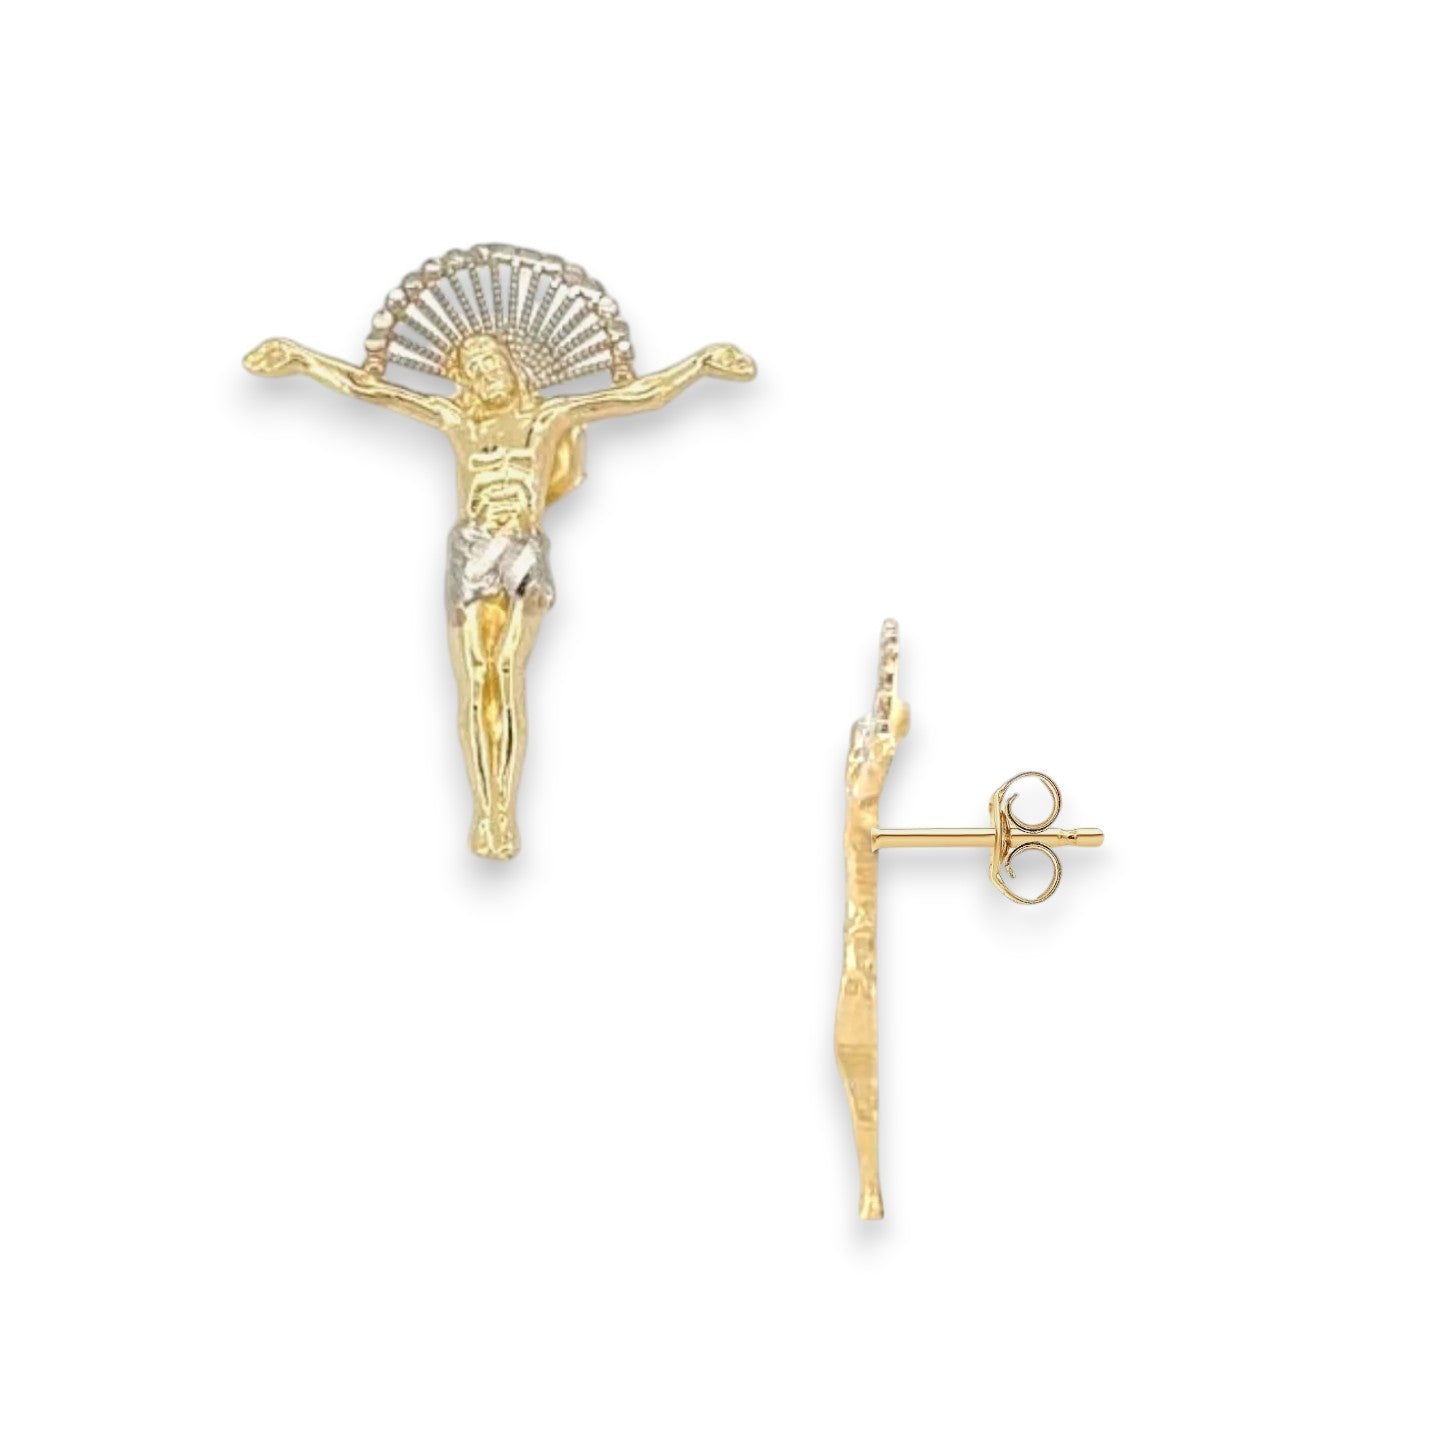 Jesus "Crucifix" Earrings  - 10k Yellow Gold